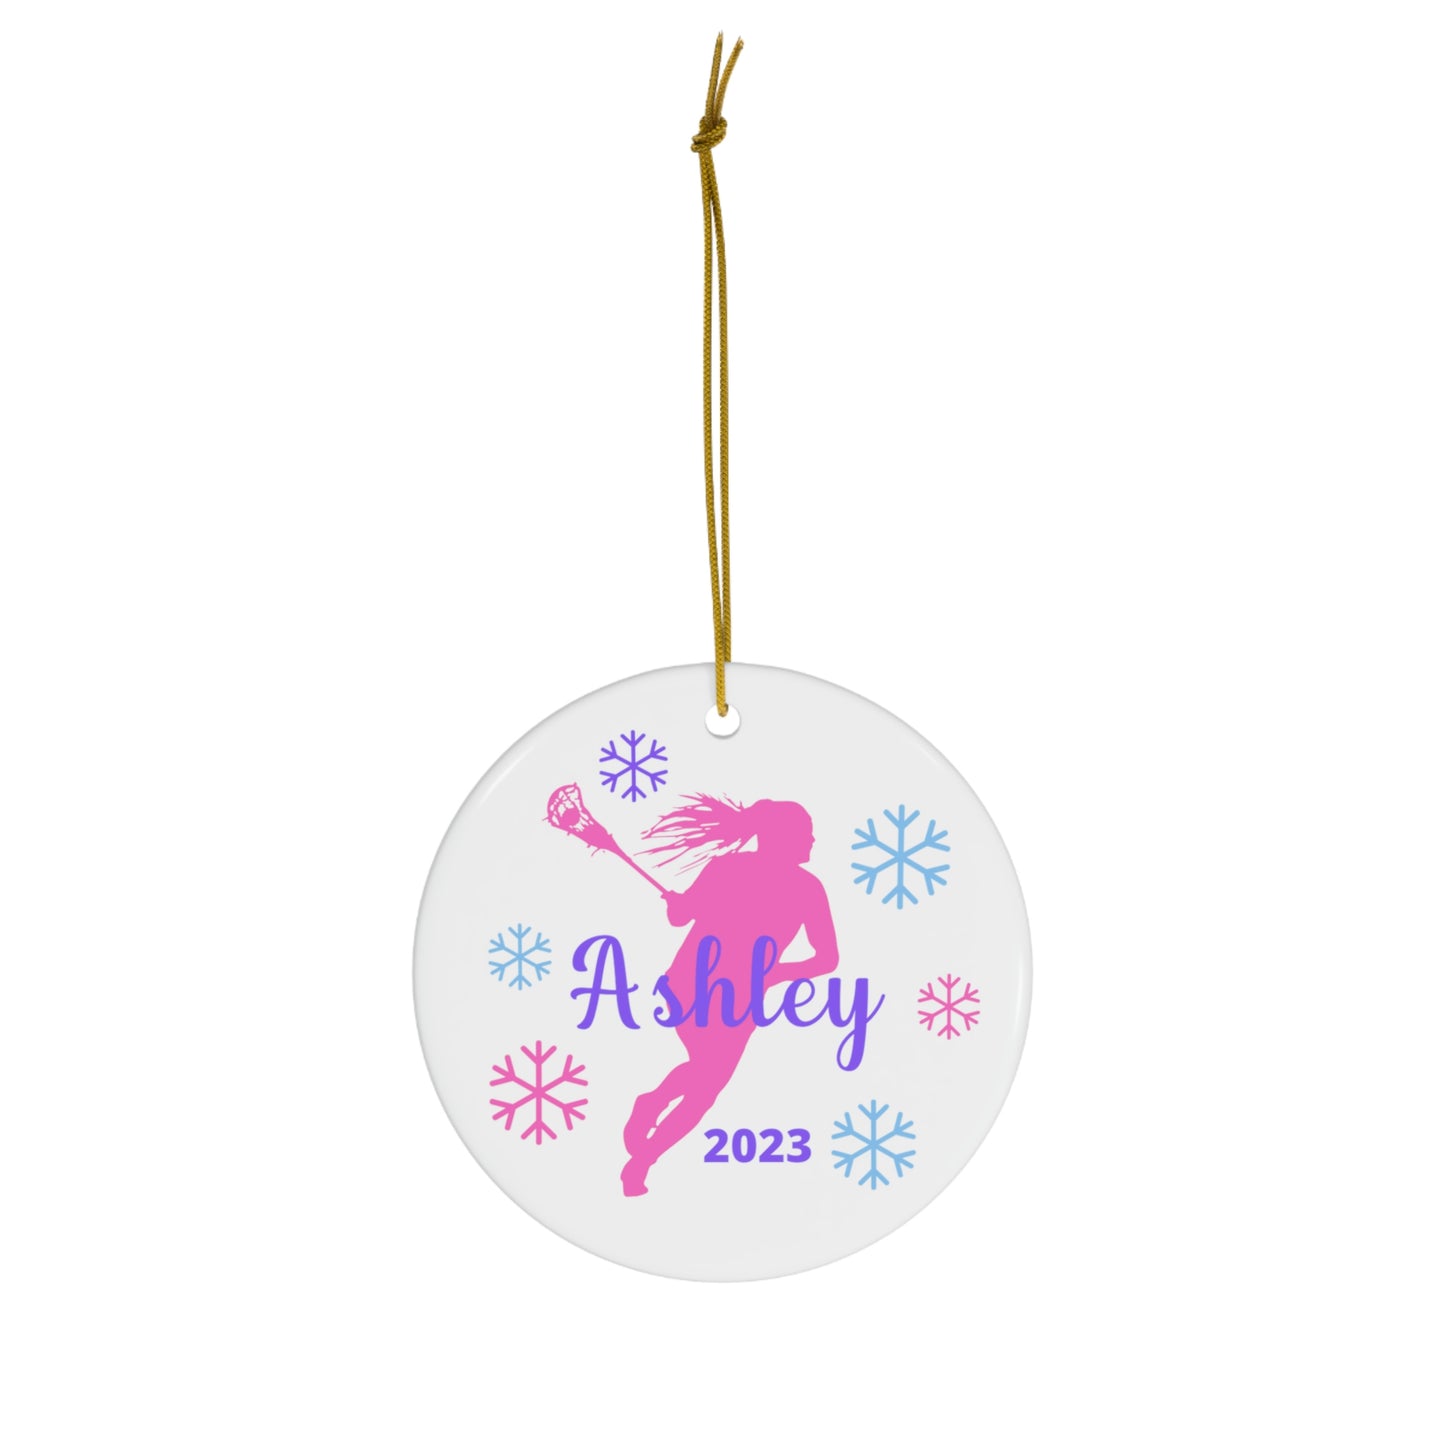 Lacrosse Ornament, Personalized Lacrosse Christmas Ornament, 2023 Ceramic Tree Ornament for Women, Gift for Mom, Wife, Grandma